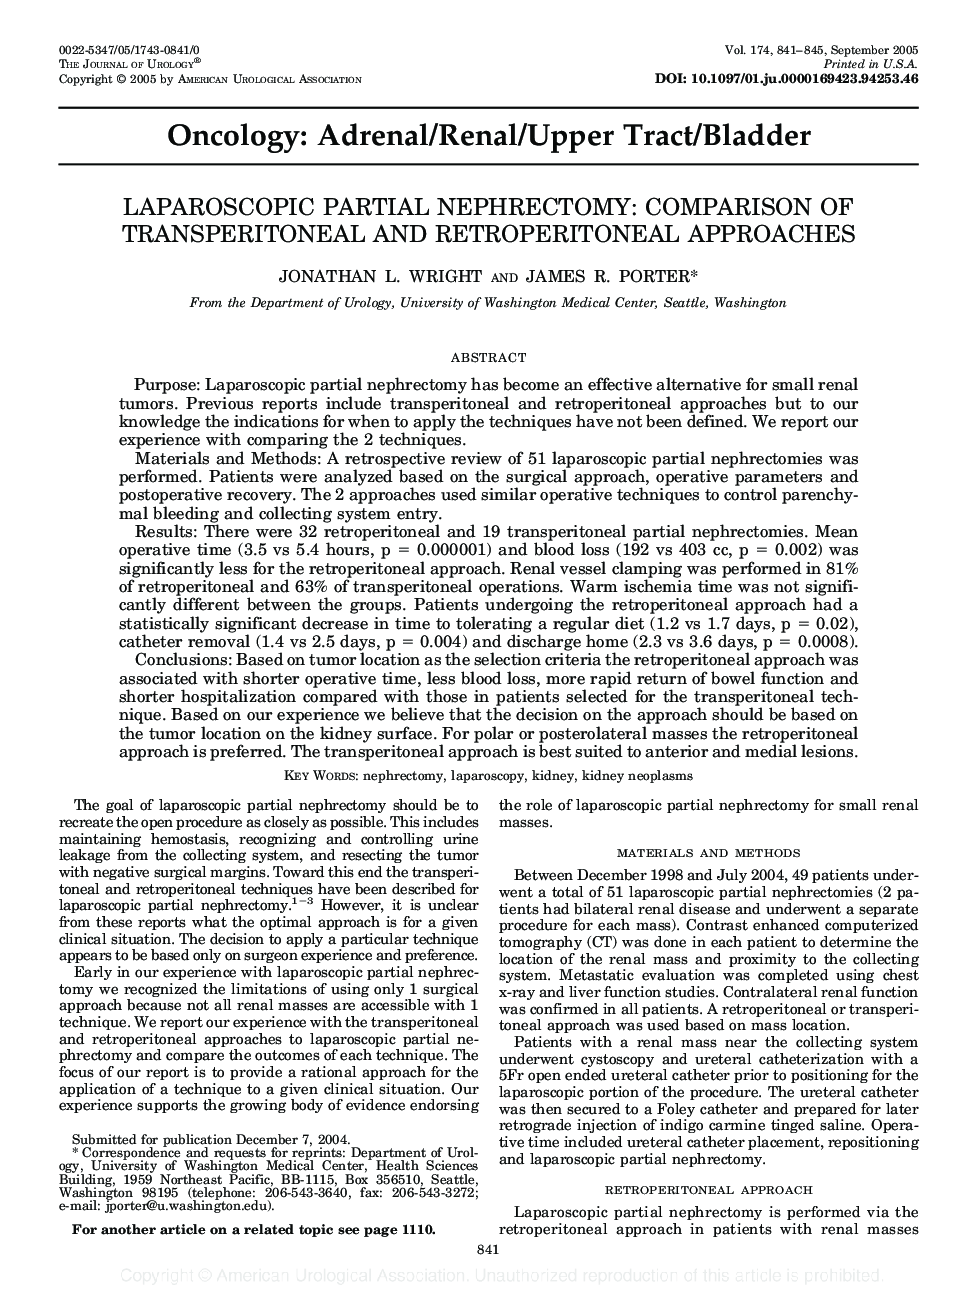 LAPAROSCOPIC PARTIAL NEPHRECTOMY: COMPARISON OF TRANSPERITONEAL AND RETROPERITONEAL APPROACHES